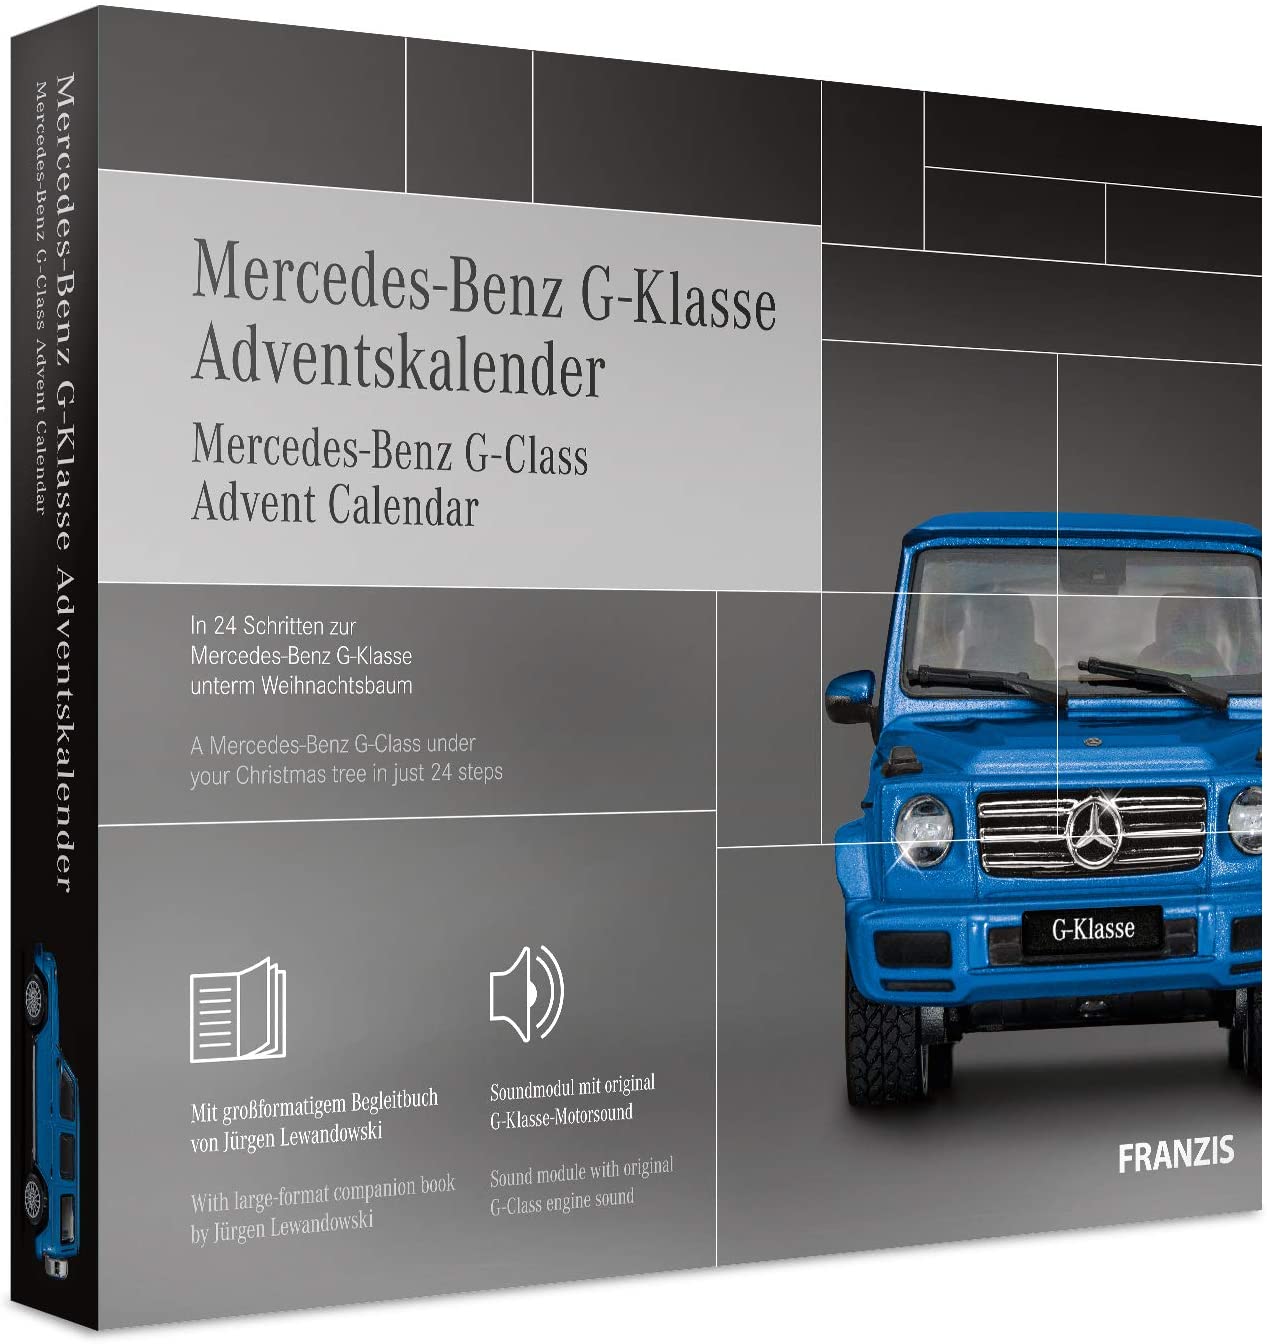 Franzis Mercedes G-Klasse Adventskalender Blauw